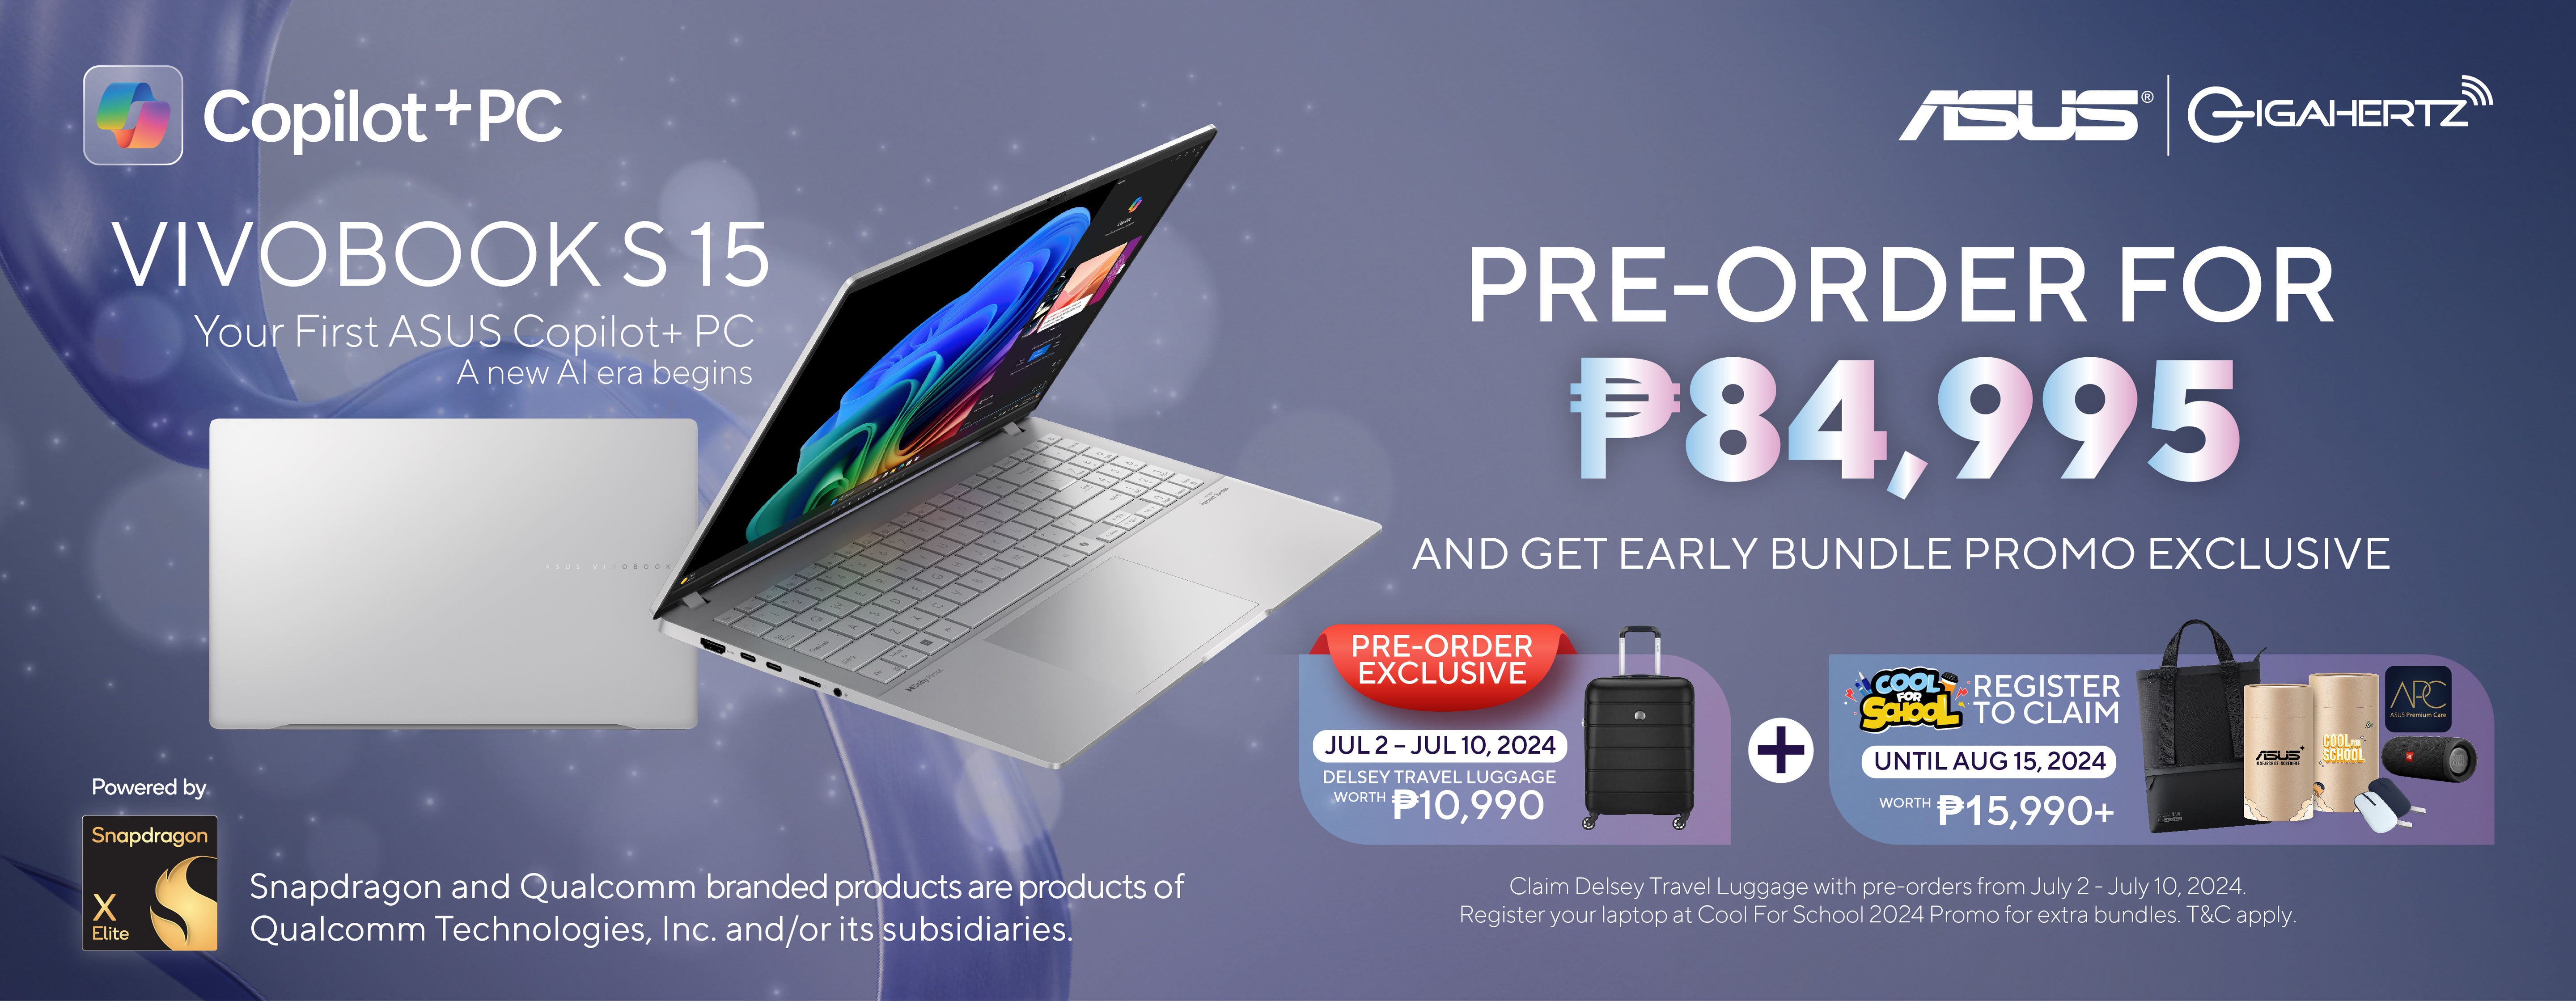 Affordable laptops | Tech gadgets online | Thin and light laptop | Asus Vivobook S15 | Gigahertz online store